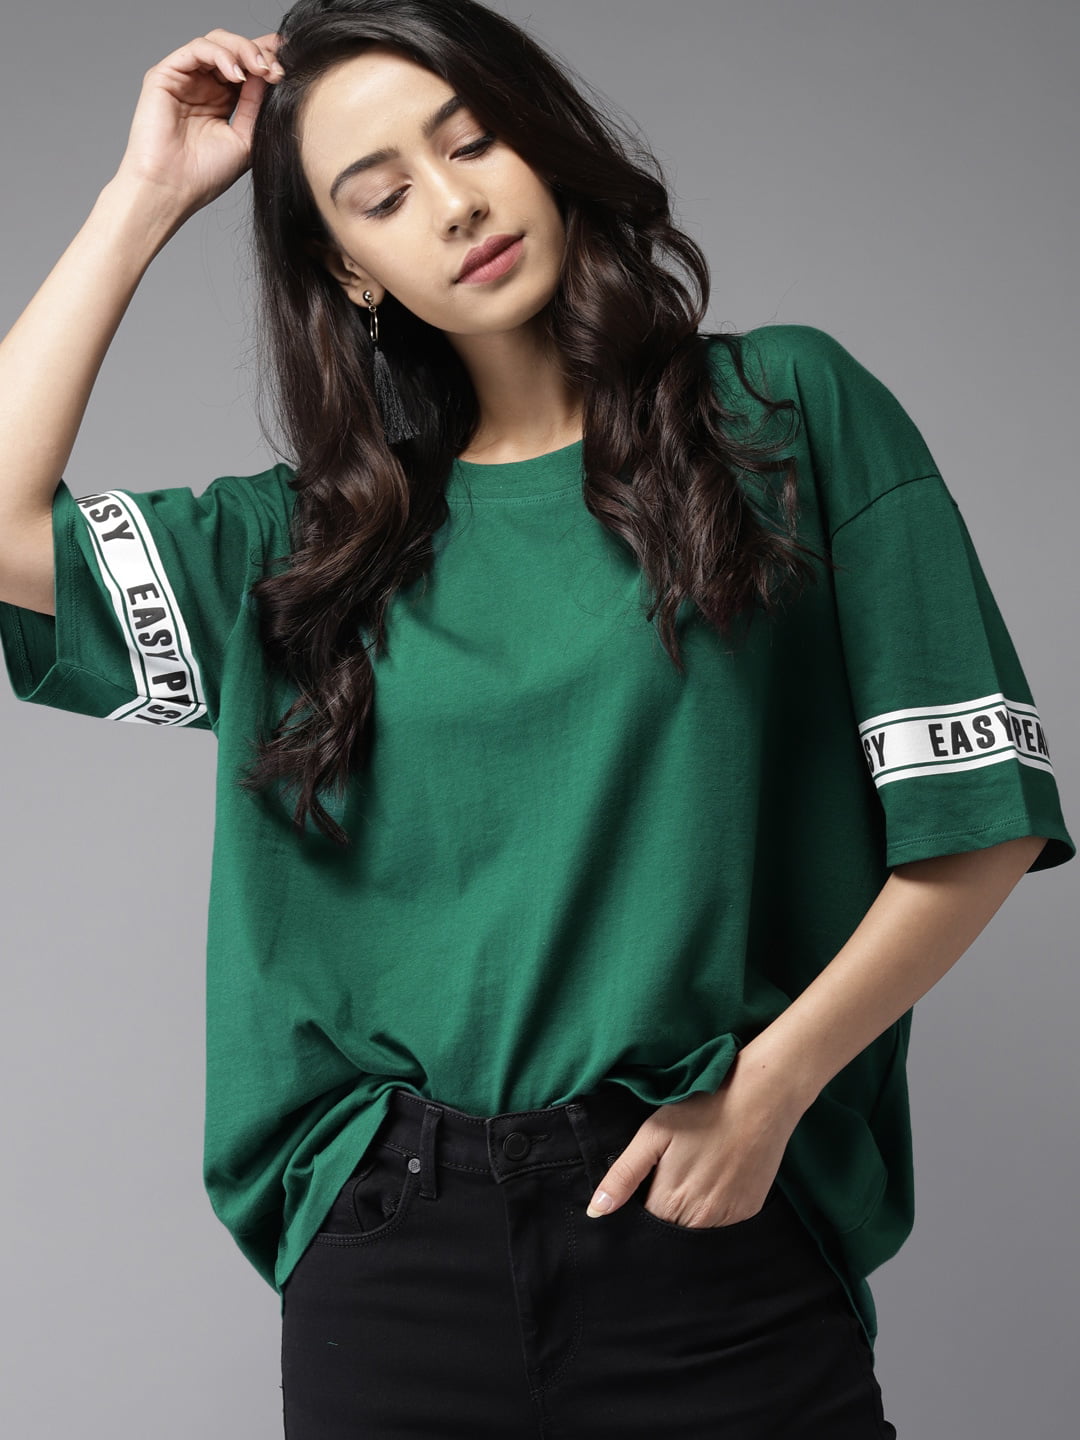 Moda Rapido - Myntra Casual T-Shirts For Women Green Round Neck Short Sleeves Pure Cotton to Wear T-shirt Clothing - Walmart.com